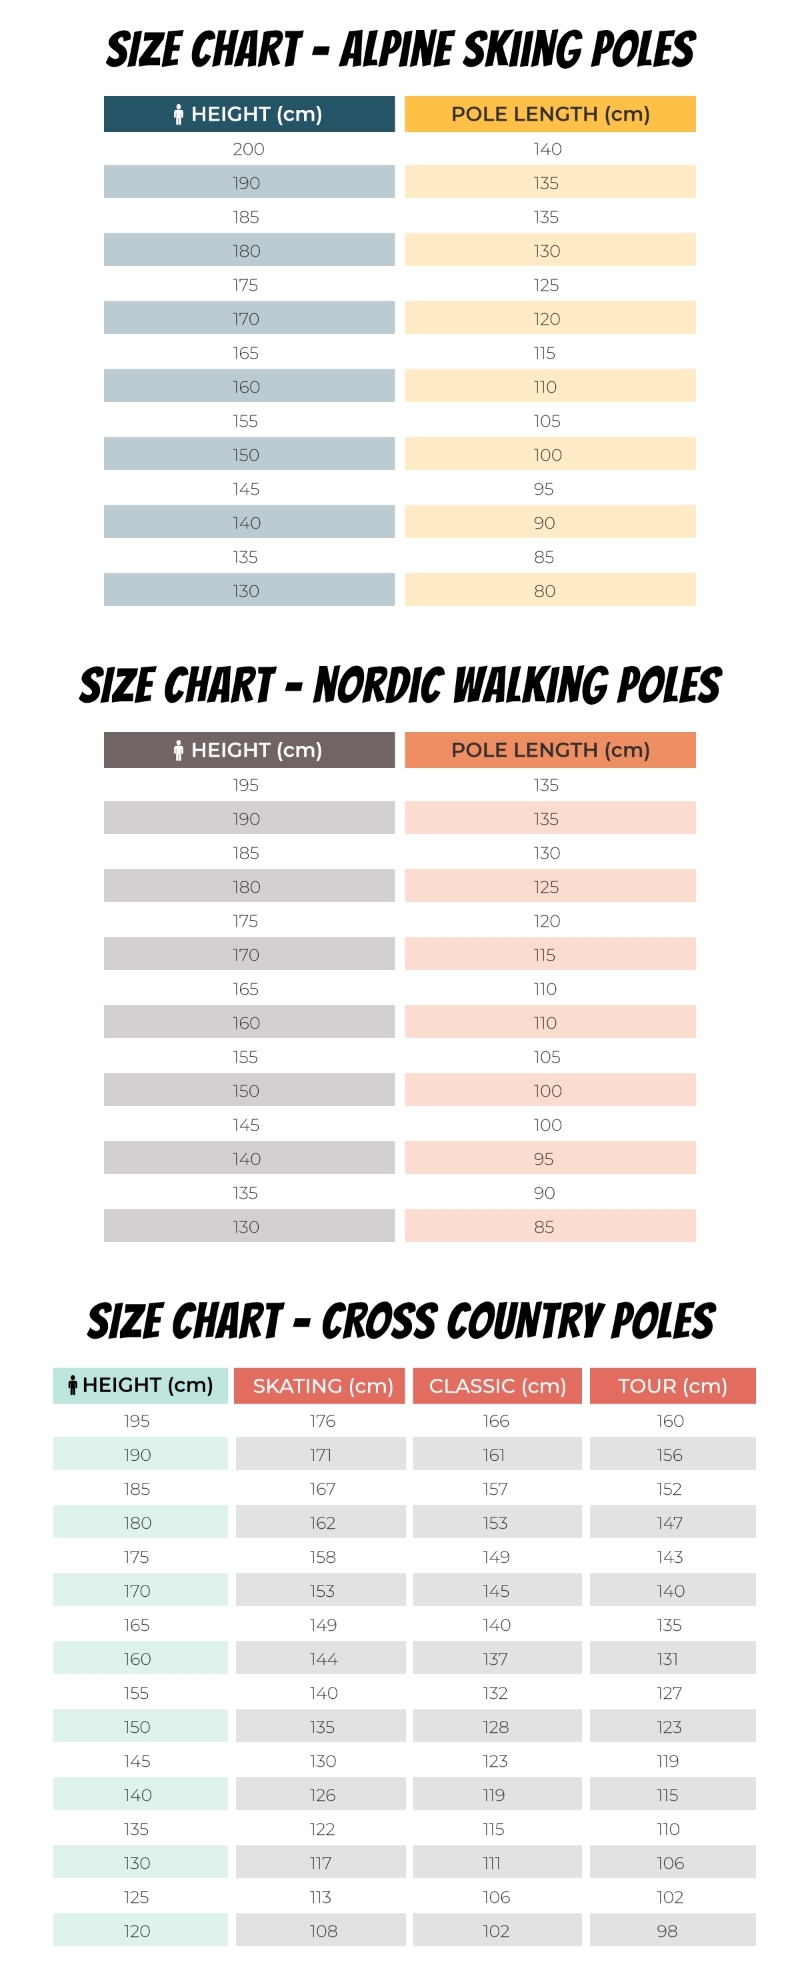 size chart poles